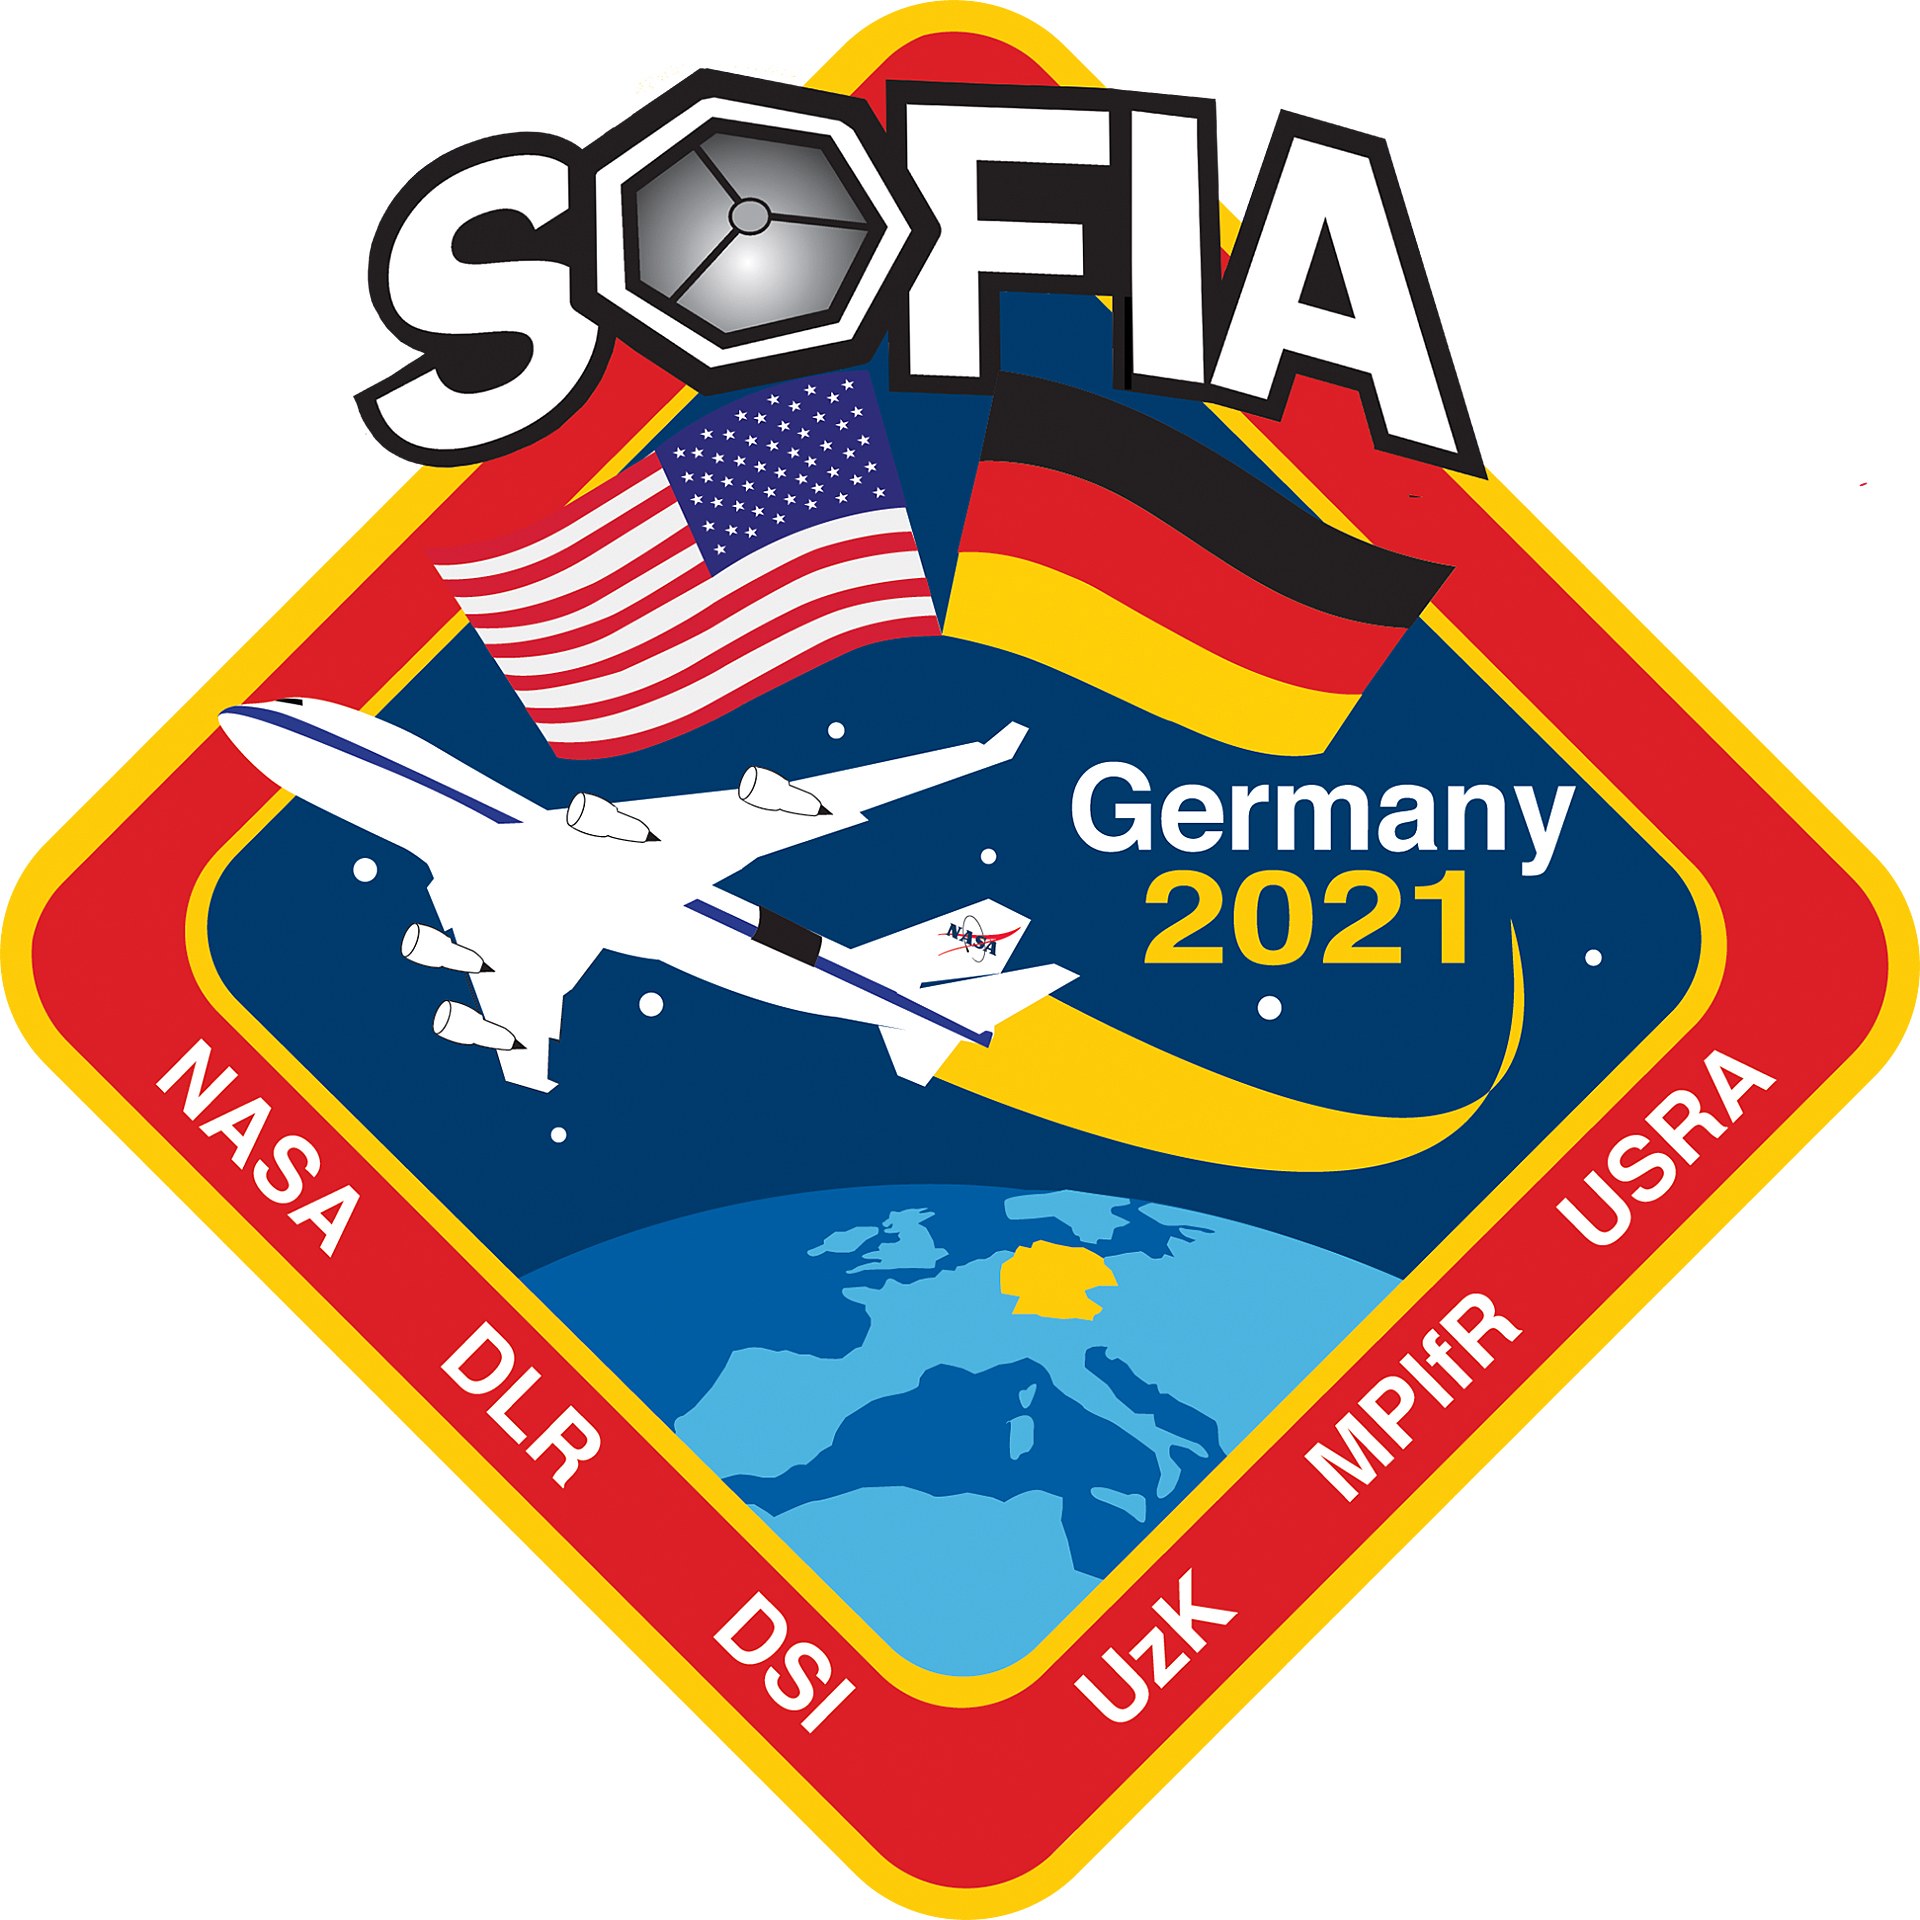 SOFIA mission logo